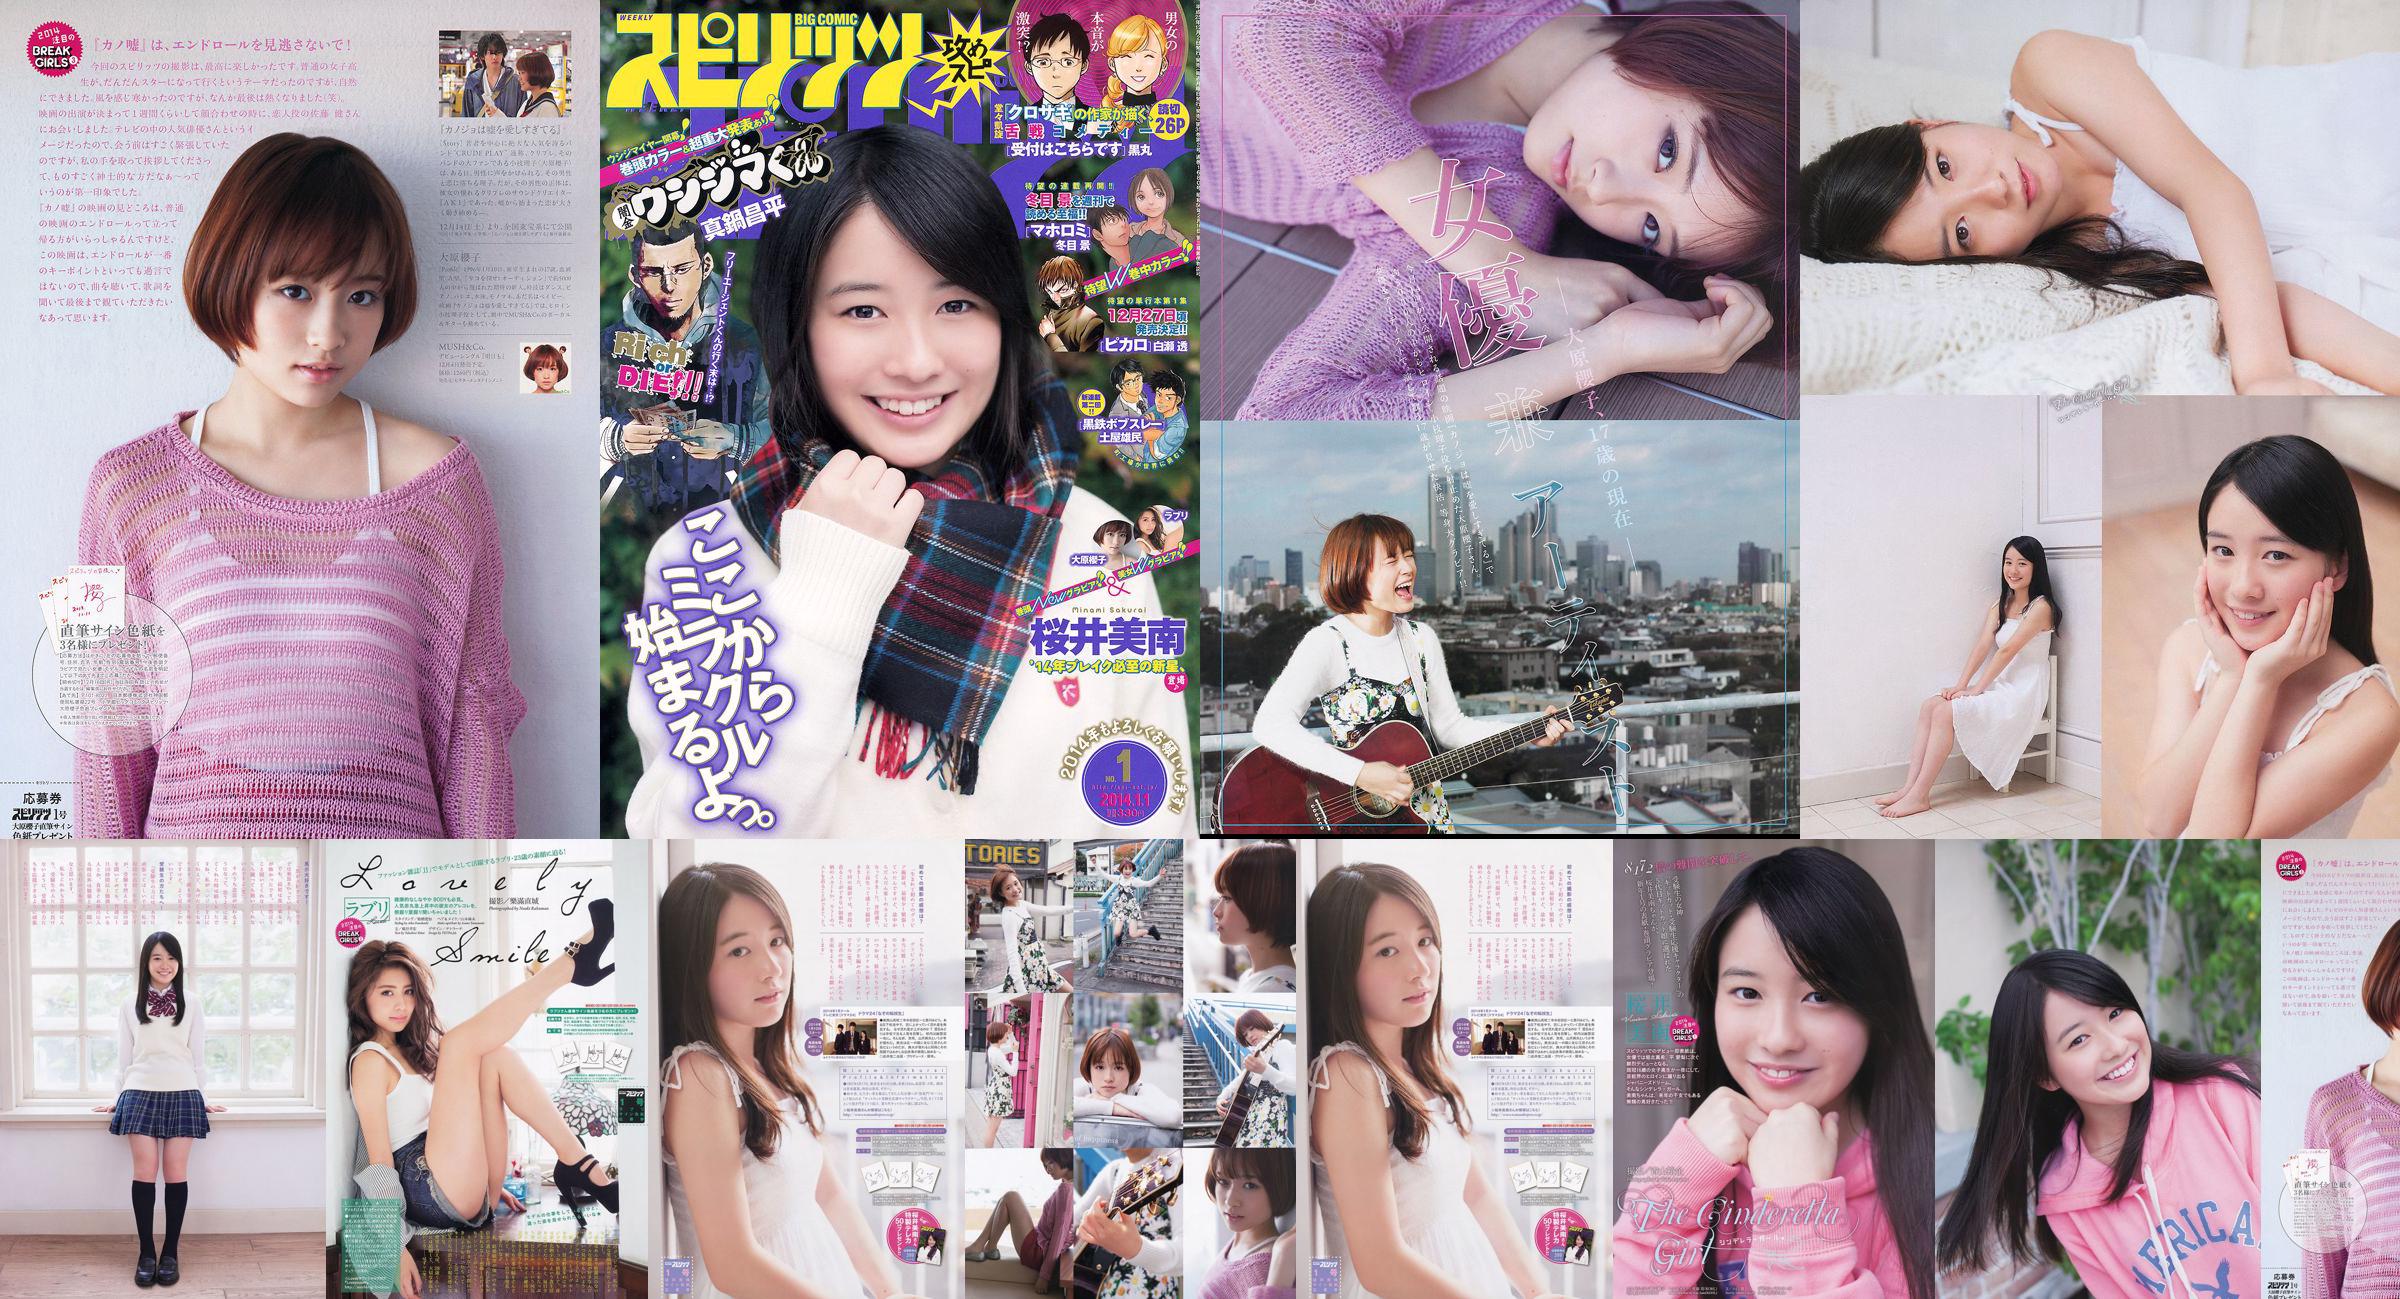 [Grands esprits de la bande dessinée hebdomadaire] Sakurai Minan Ohara Sakurako 2014 Magazine photo n ° 01 No.7e4022 Page 4